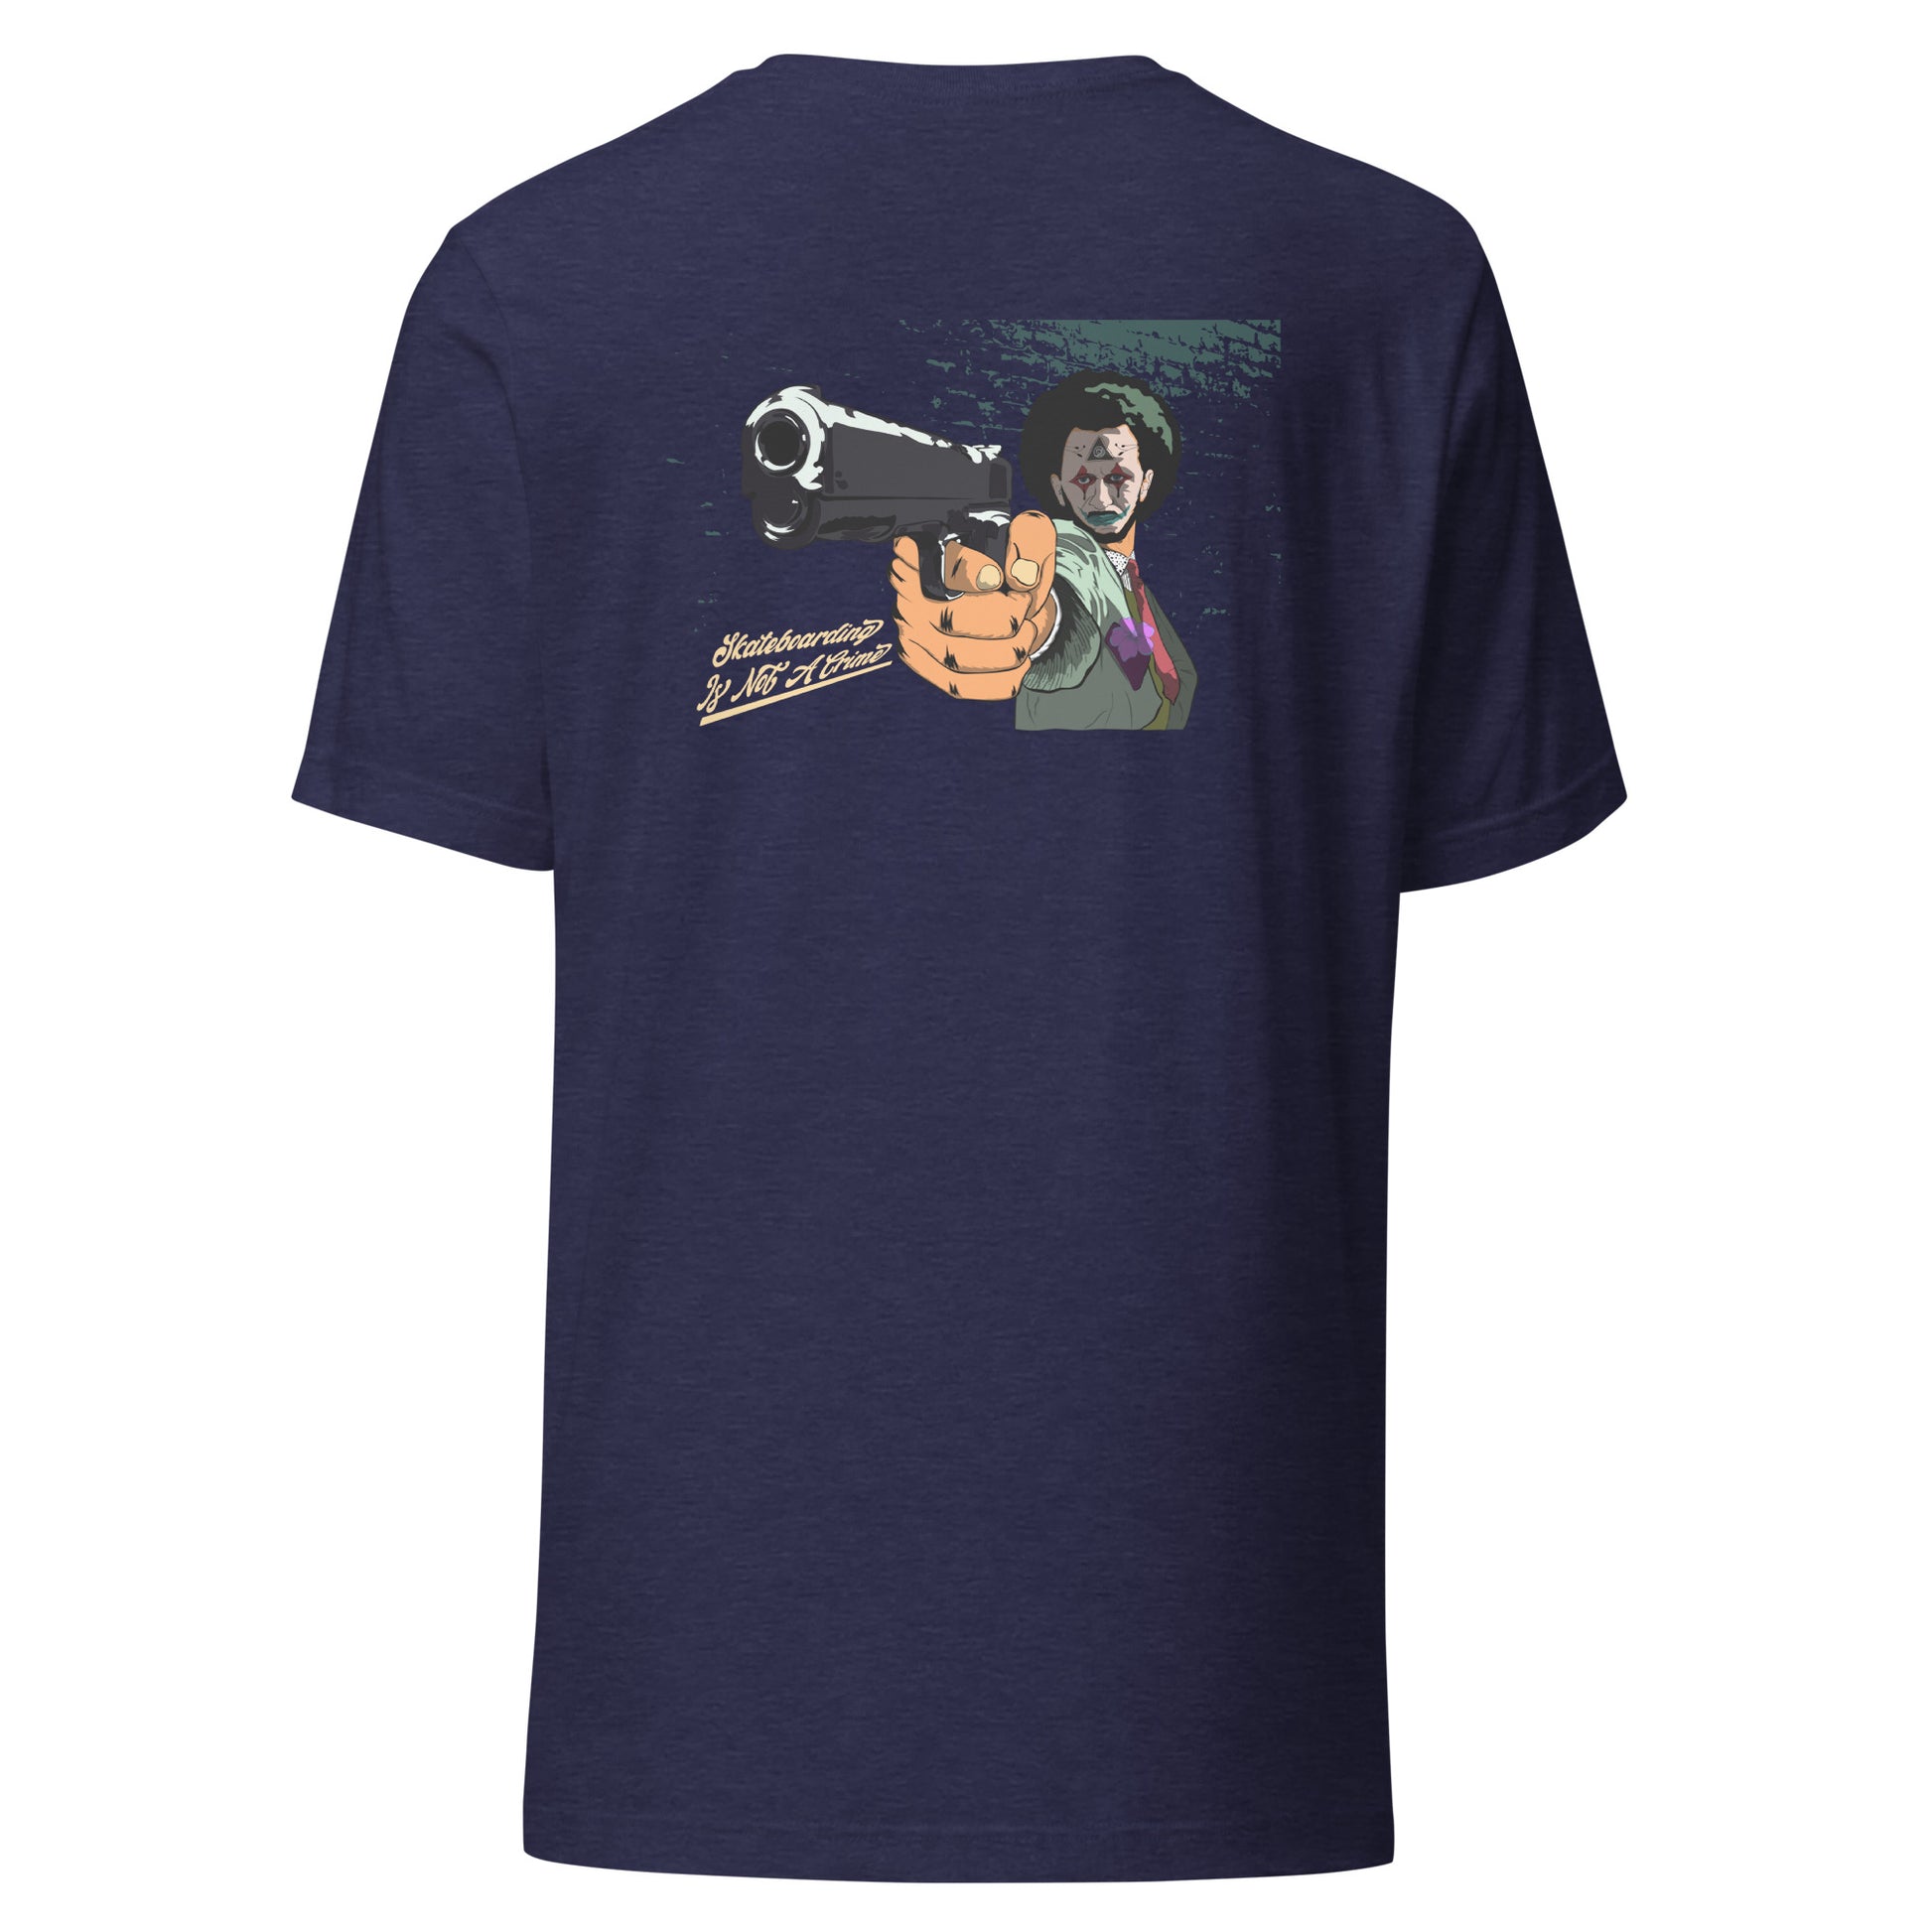 T-Shirt Skateboarding Is Not A Crime design joker dos tshirt couleur bleu nuit